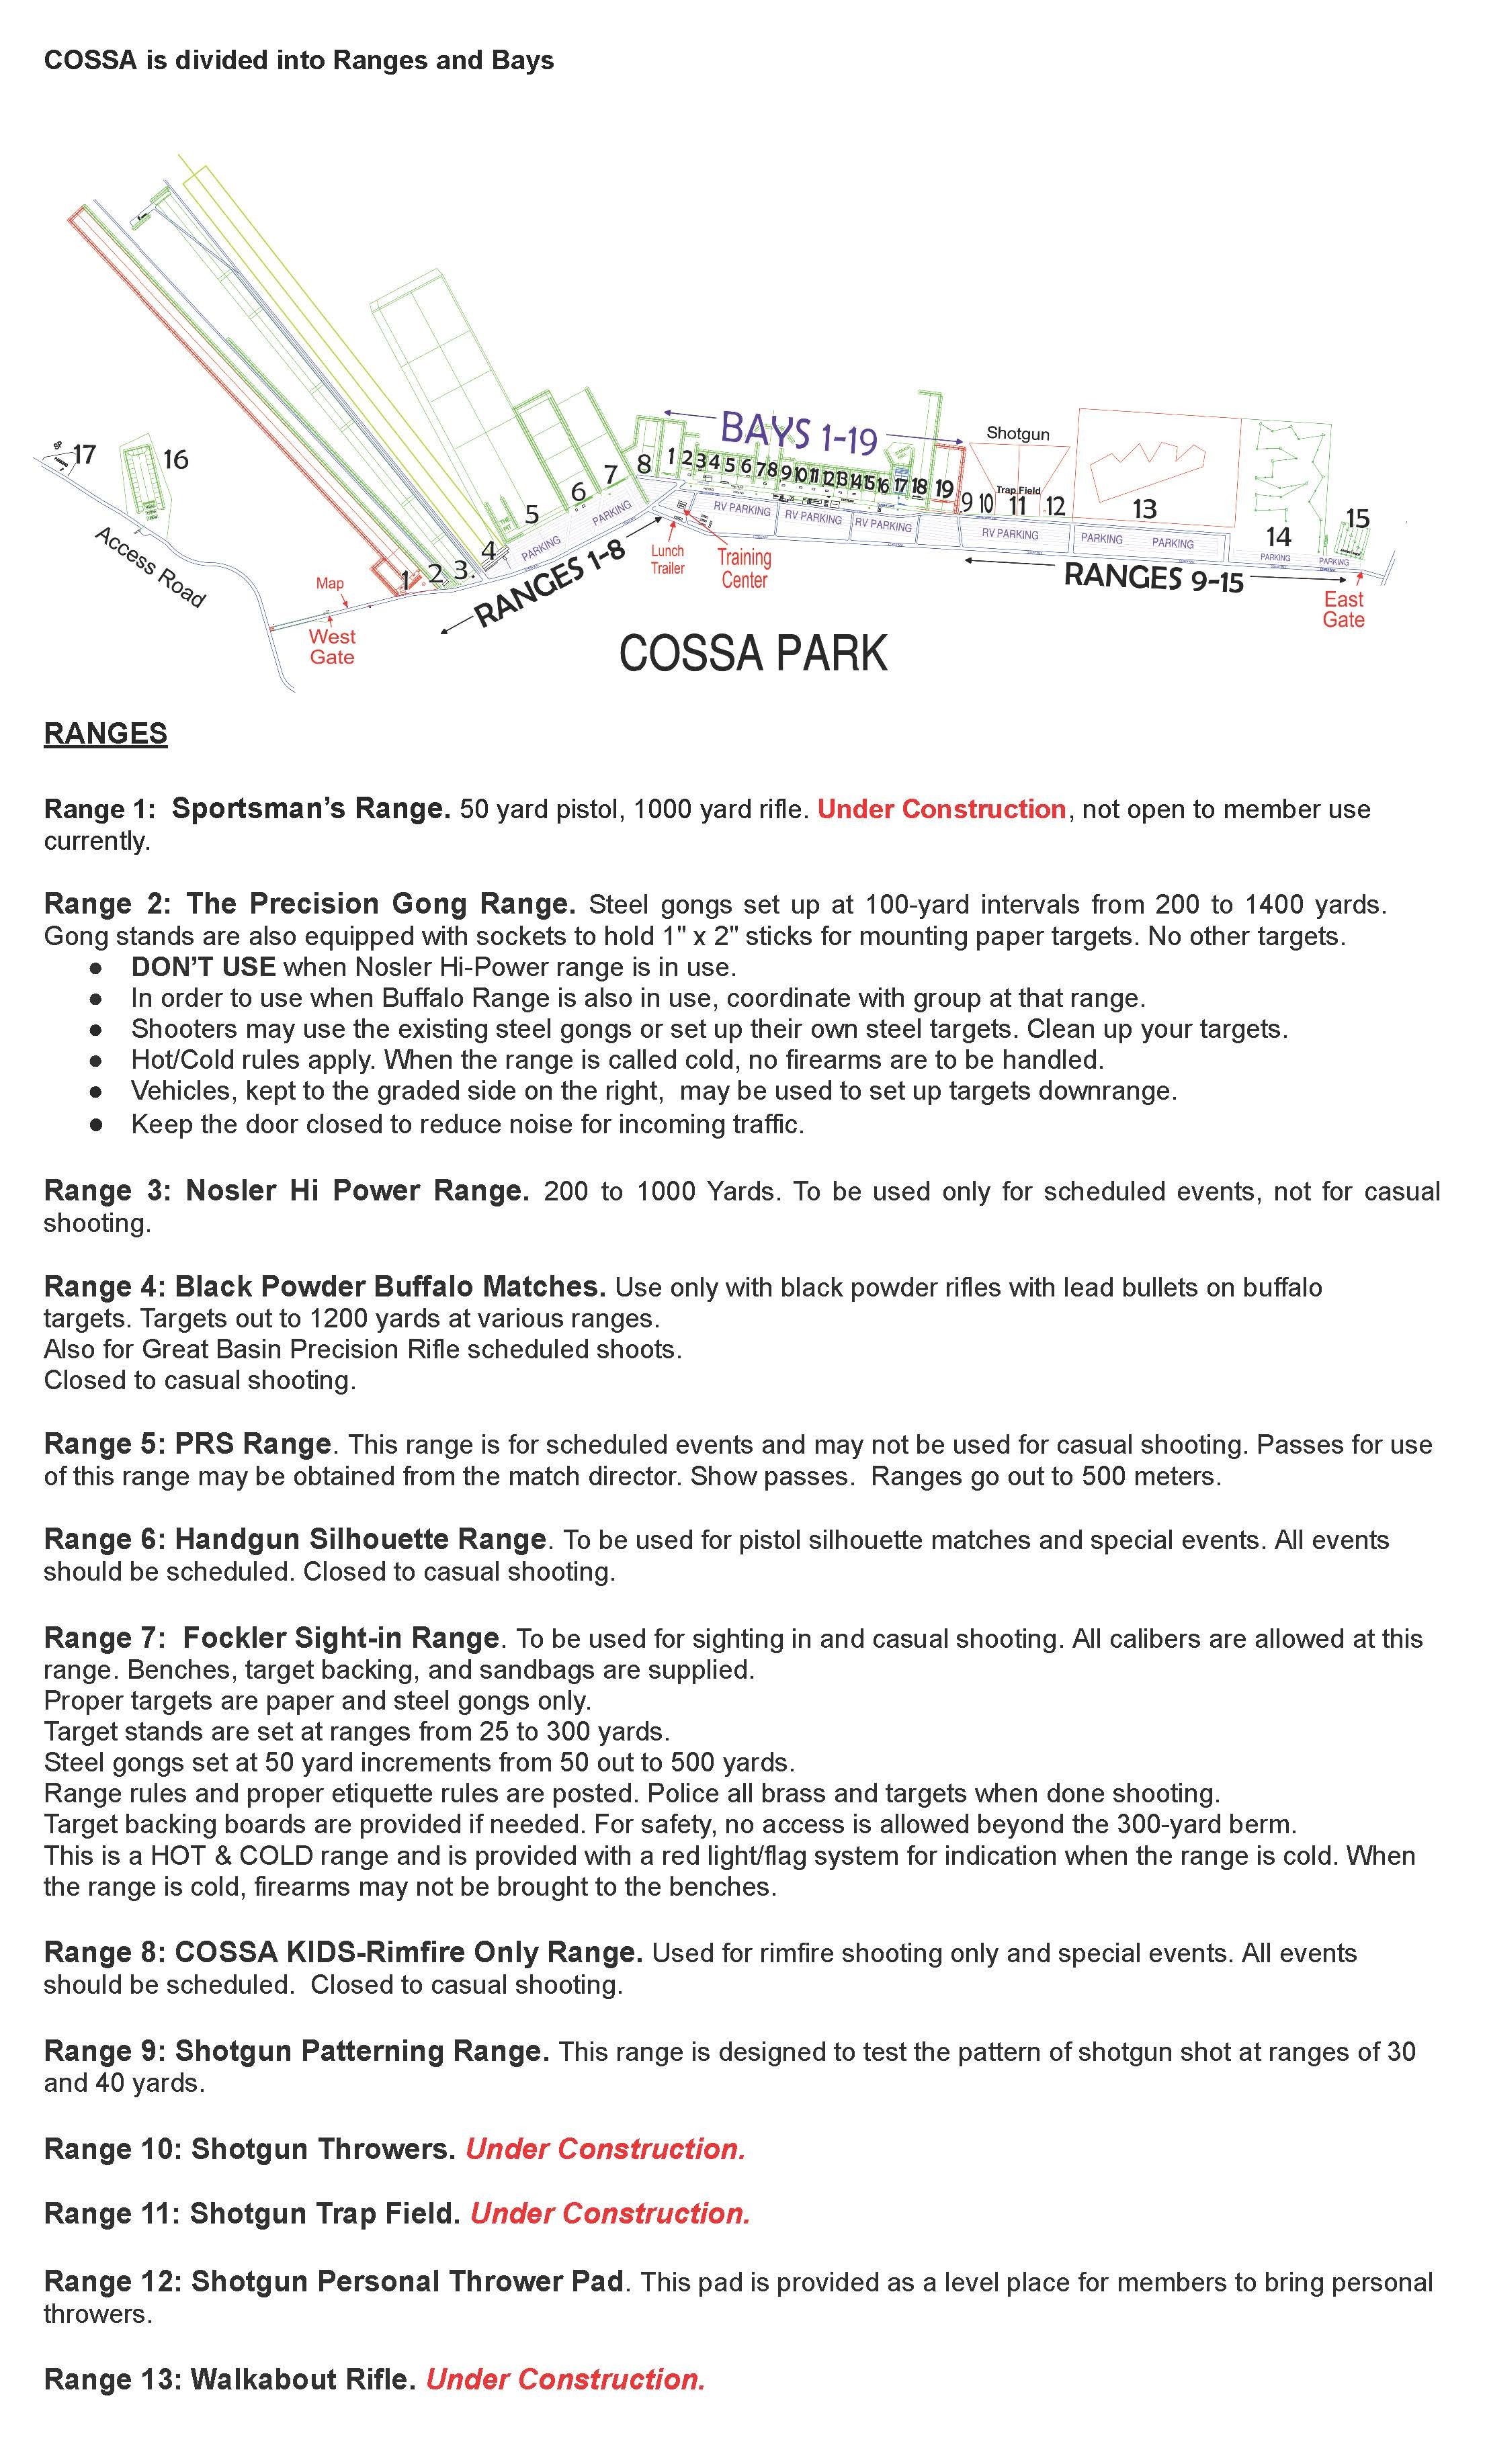 COSSA Brochure_Page_1.jpg